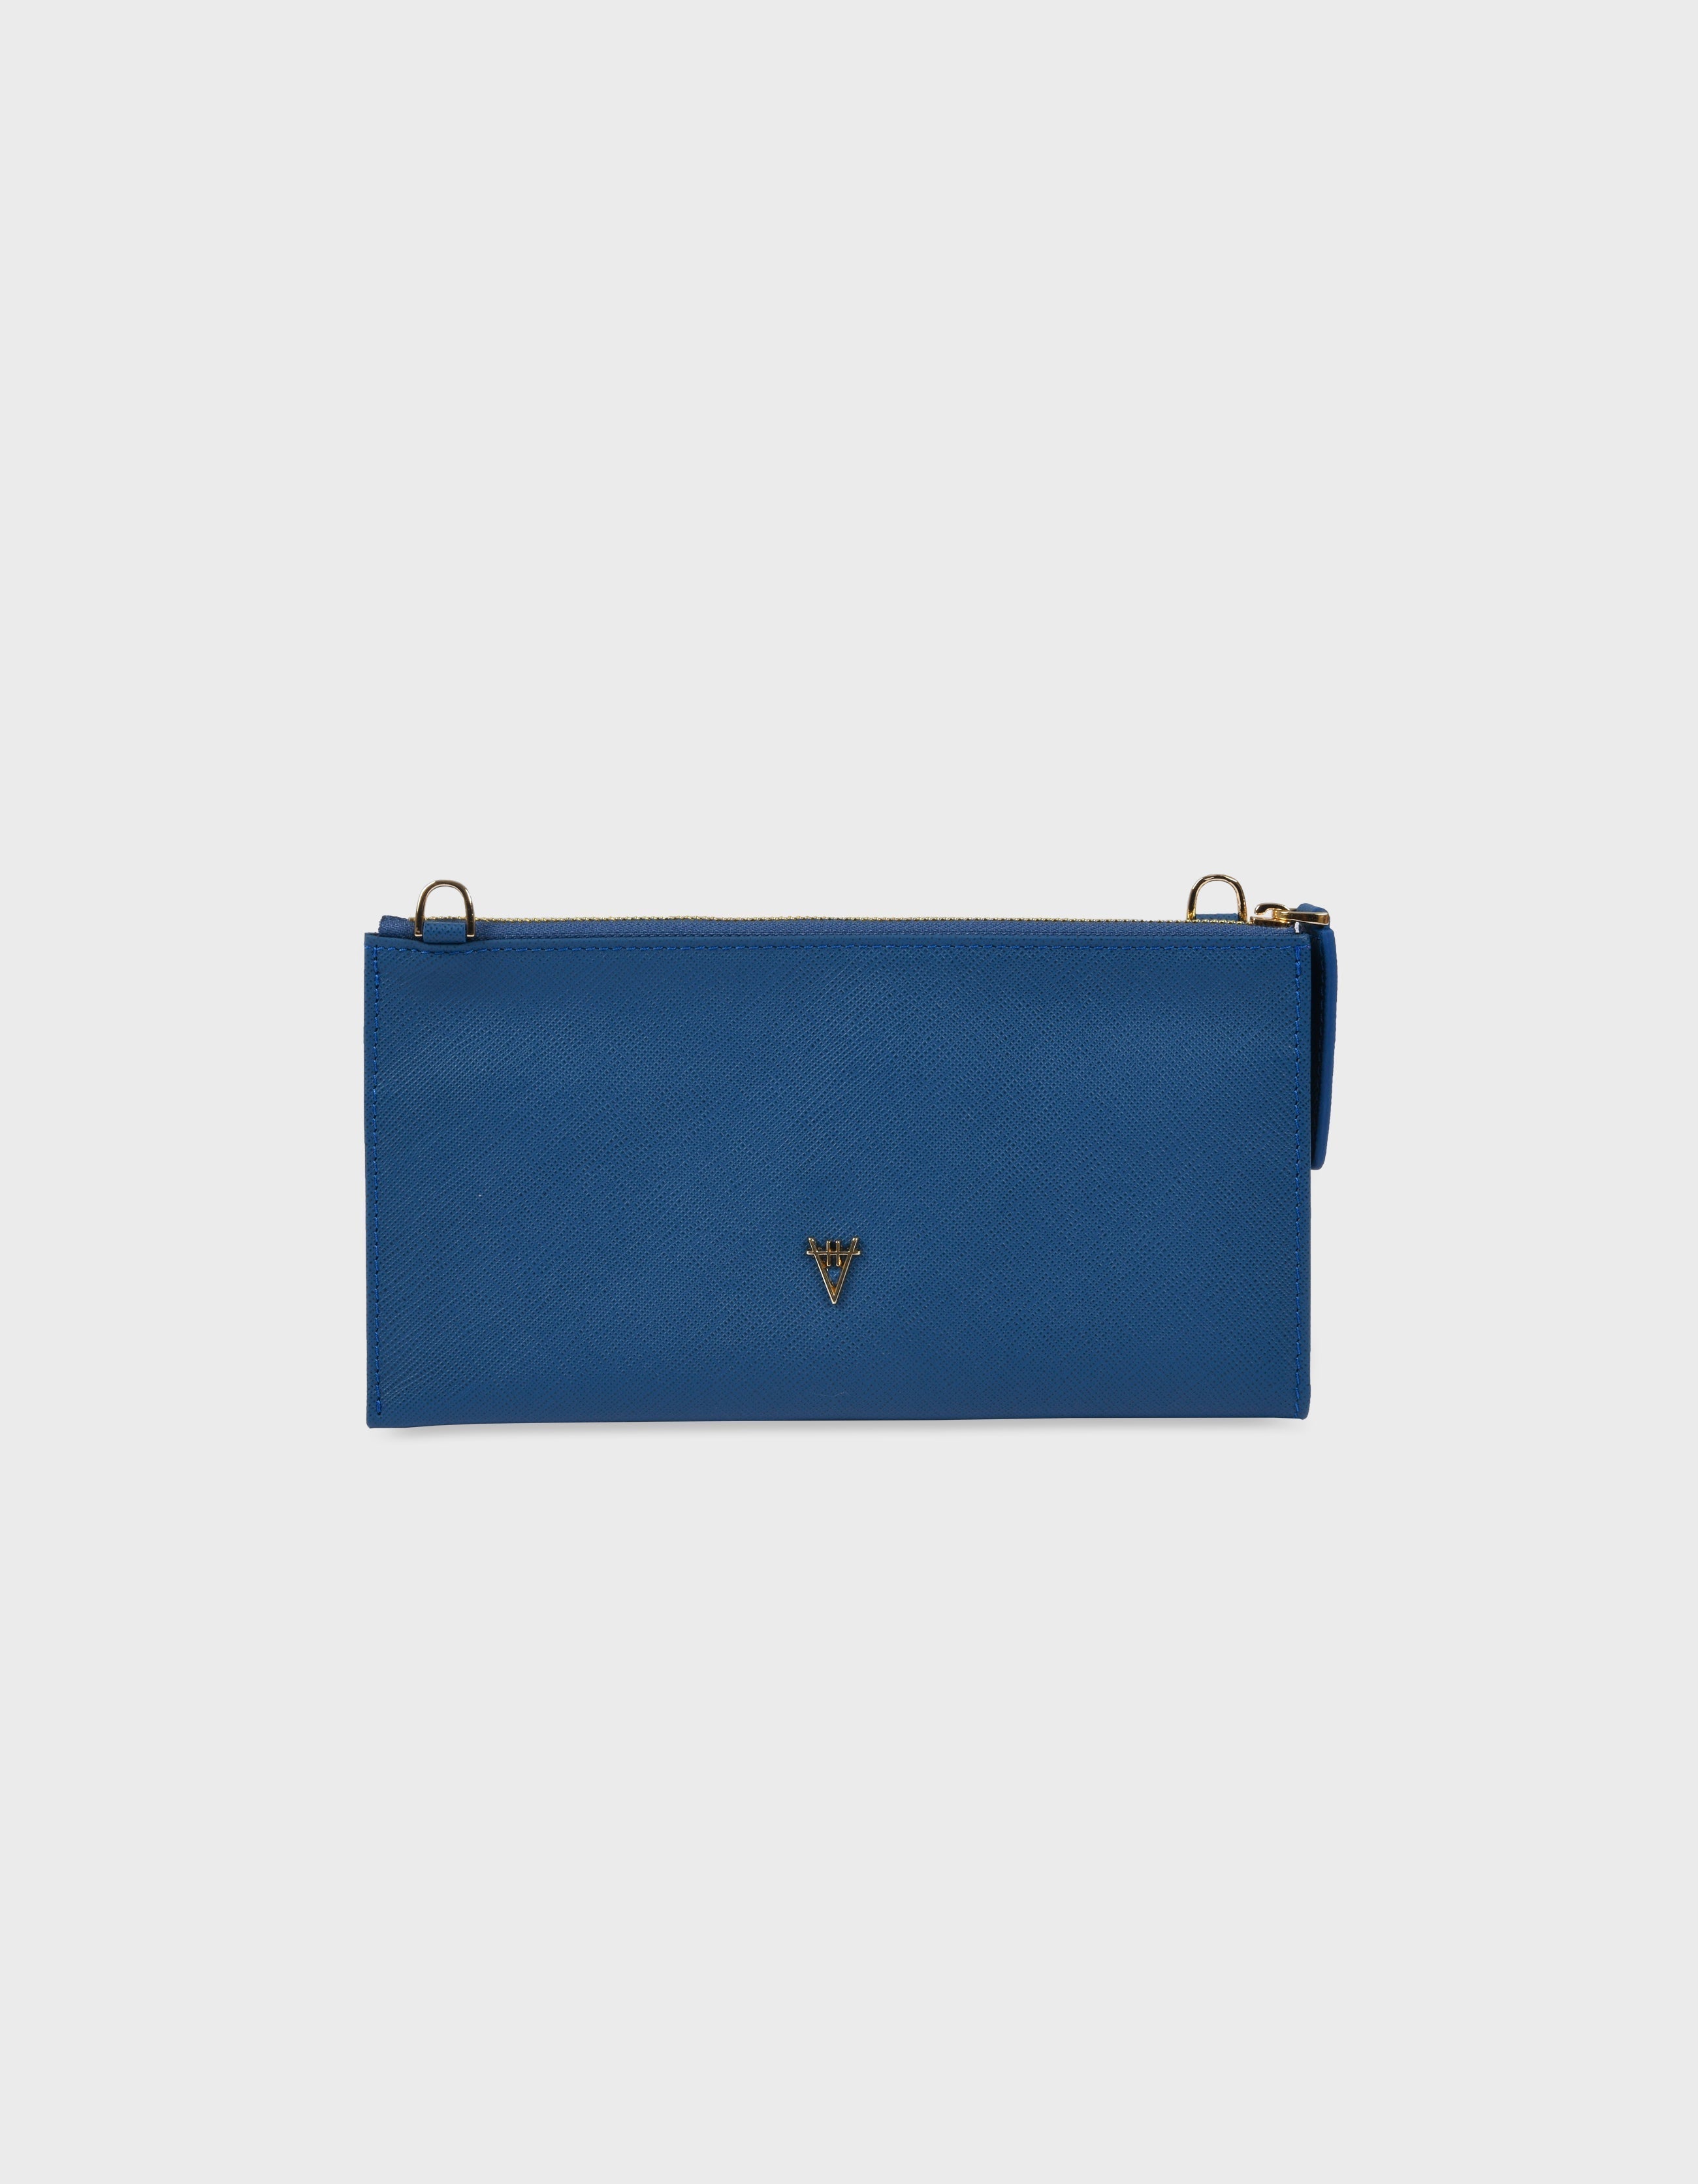 HiVa Atelier | Omnia Chain Bag & Clutch Blue Sapphire | Beautiful and Versatile